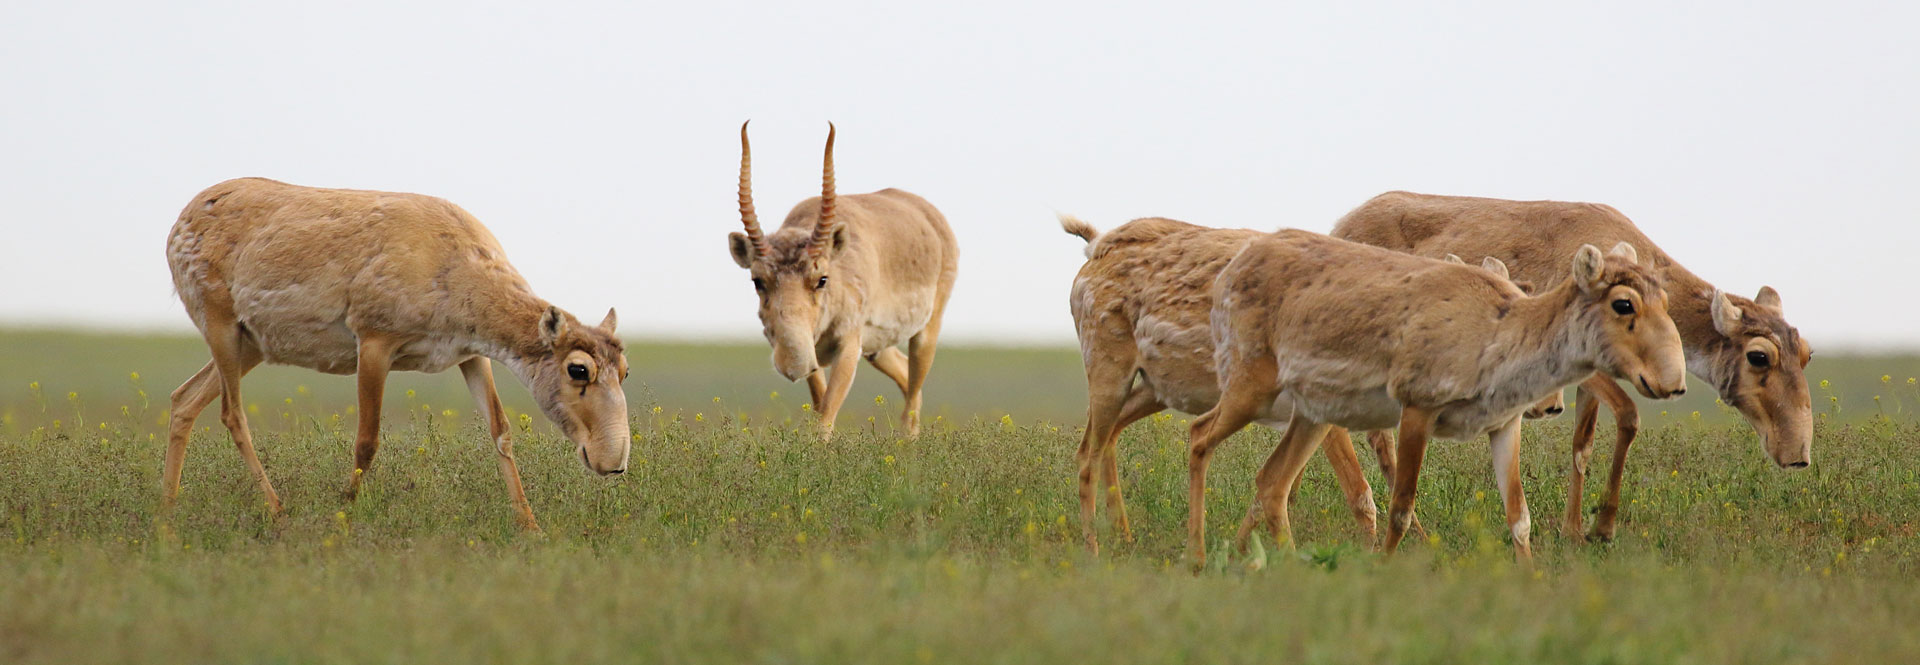 Saiga Antelope - Conjour Conservation Species Report - Group of Saiga - 5